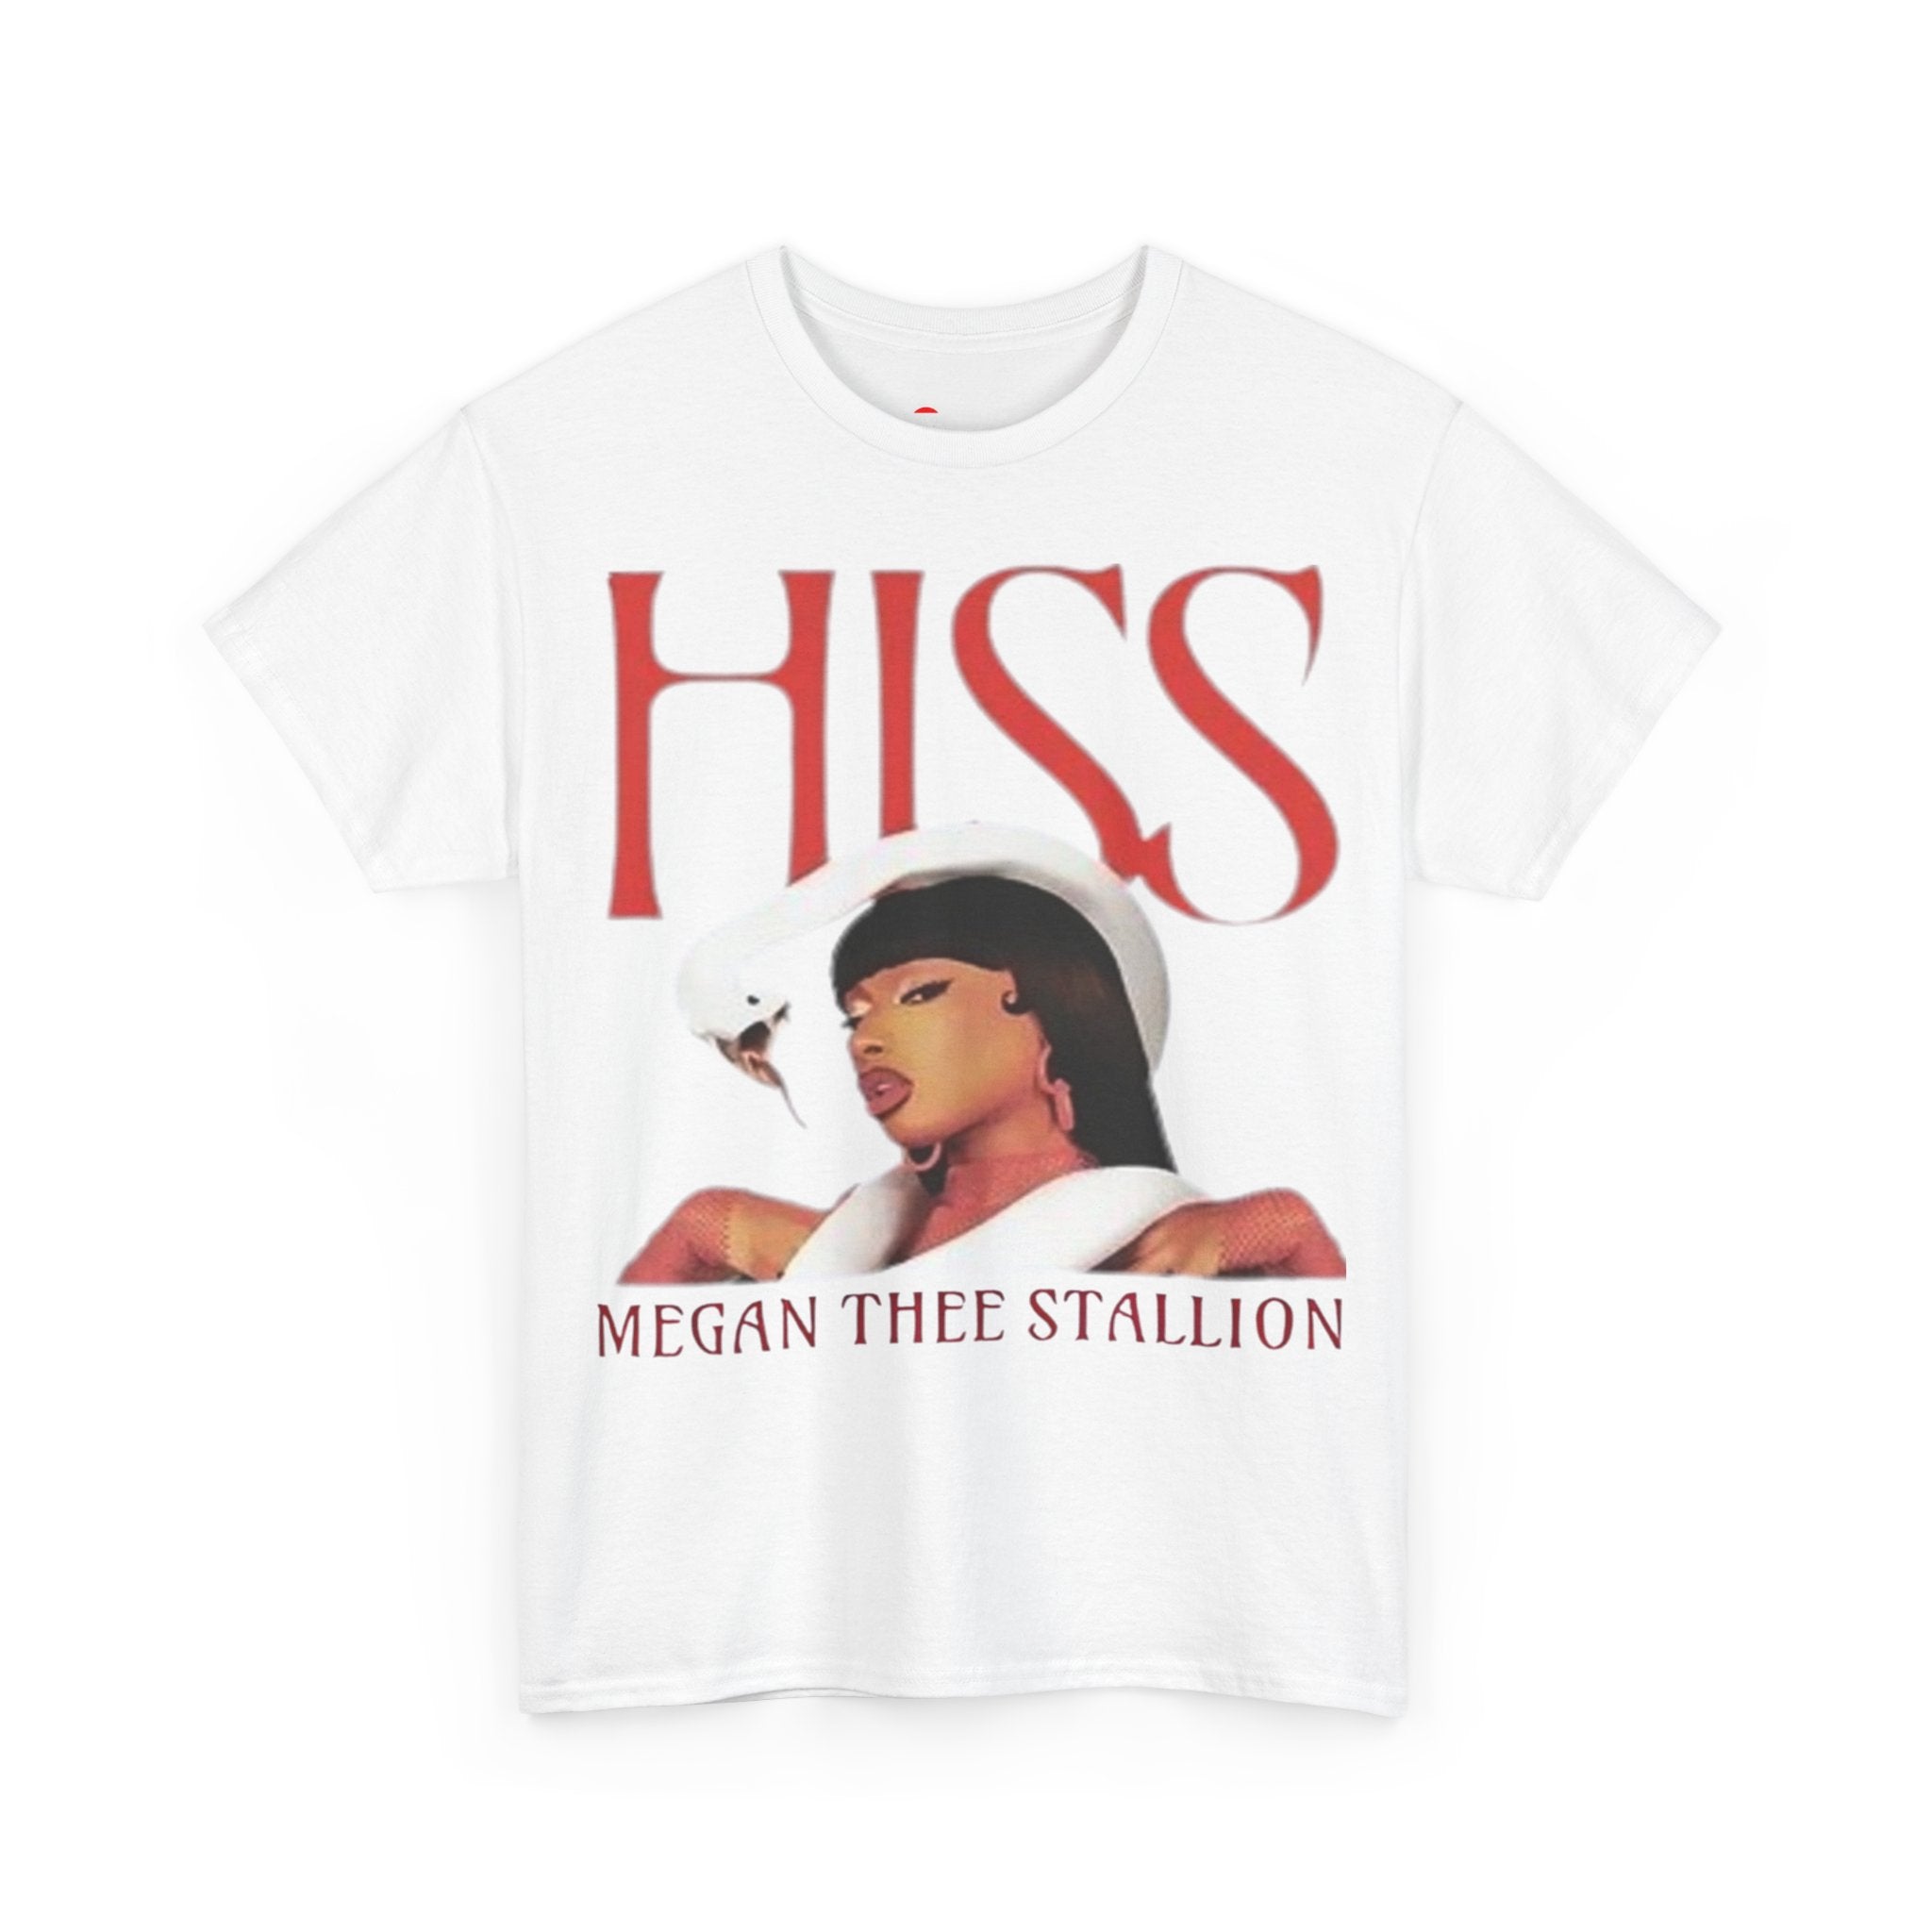 Meg The Stallion "HISS" T-Shirt